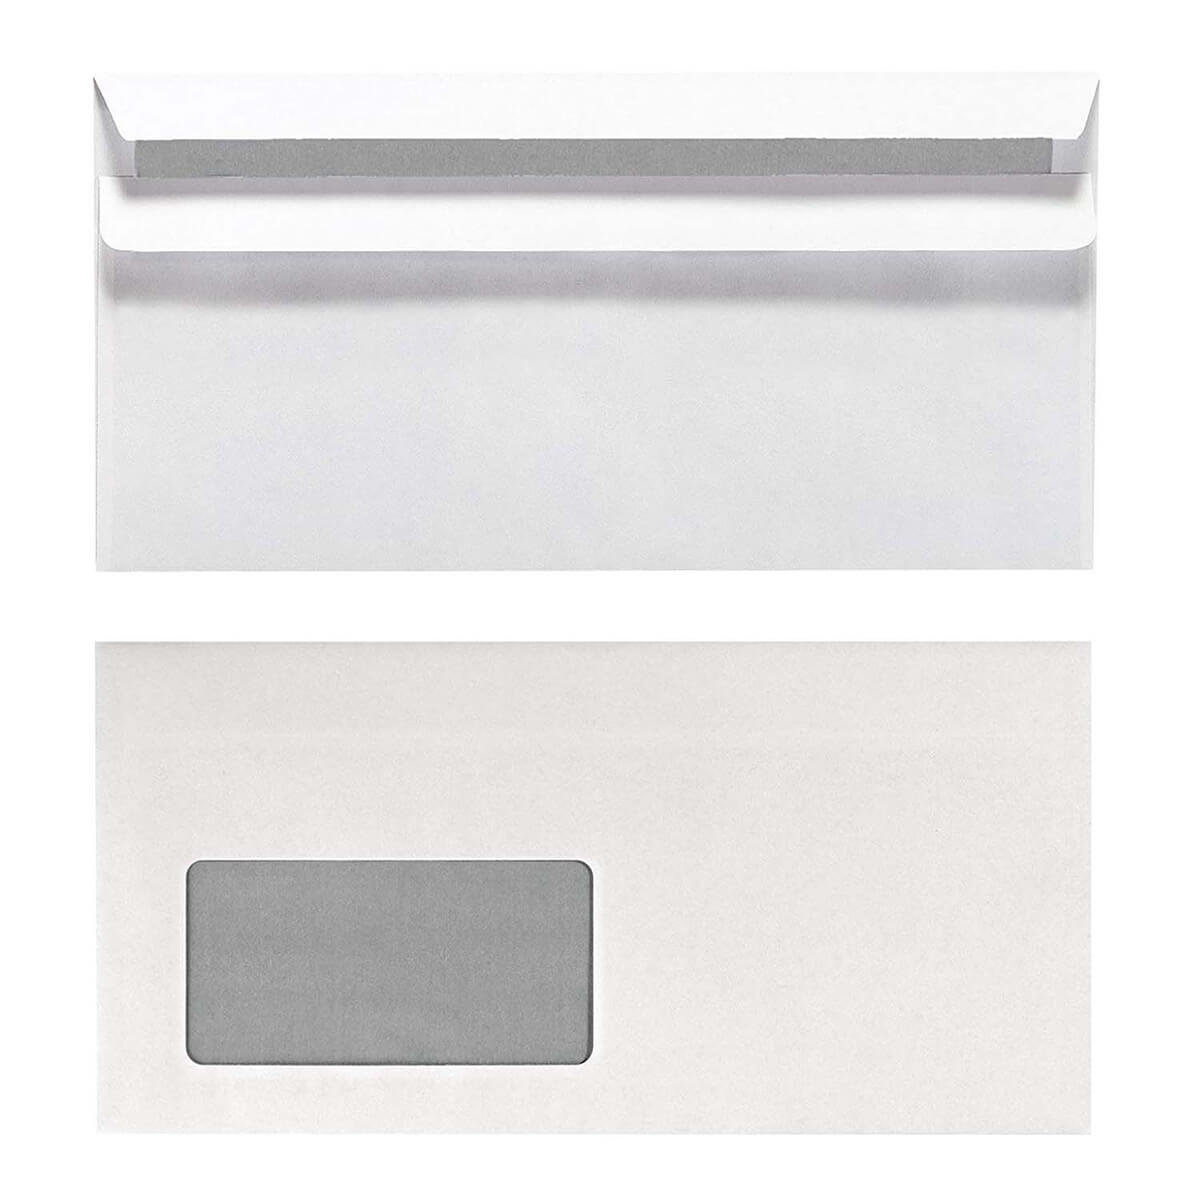 100x Herlitz Envelope DIN lang white, inner printing, windowed